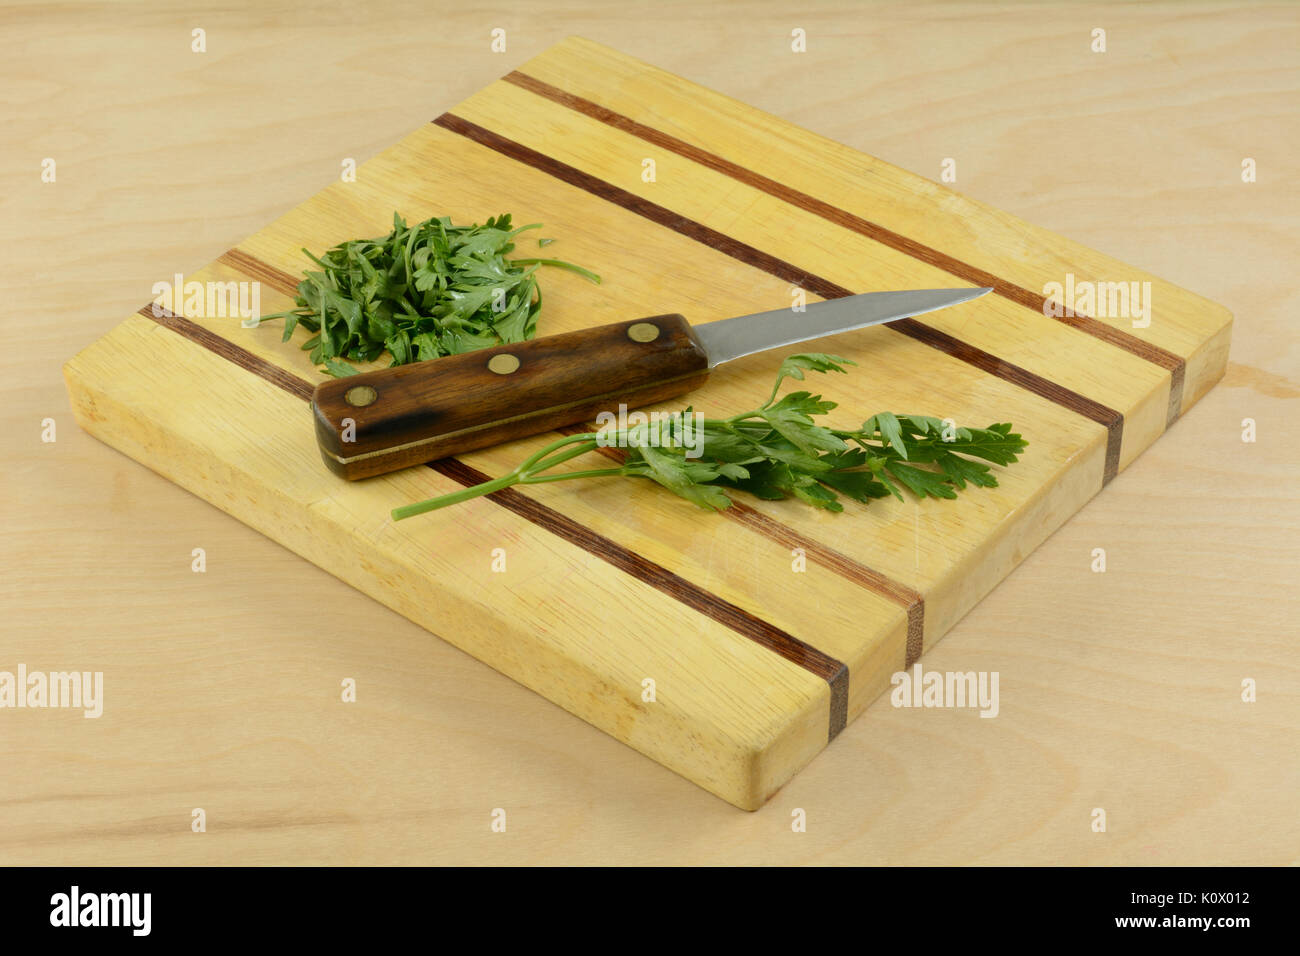 Perejil fresco picado con cuchillo de cocina tabla de cortar de madera Foto de stock